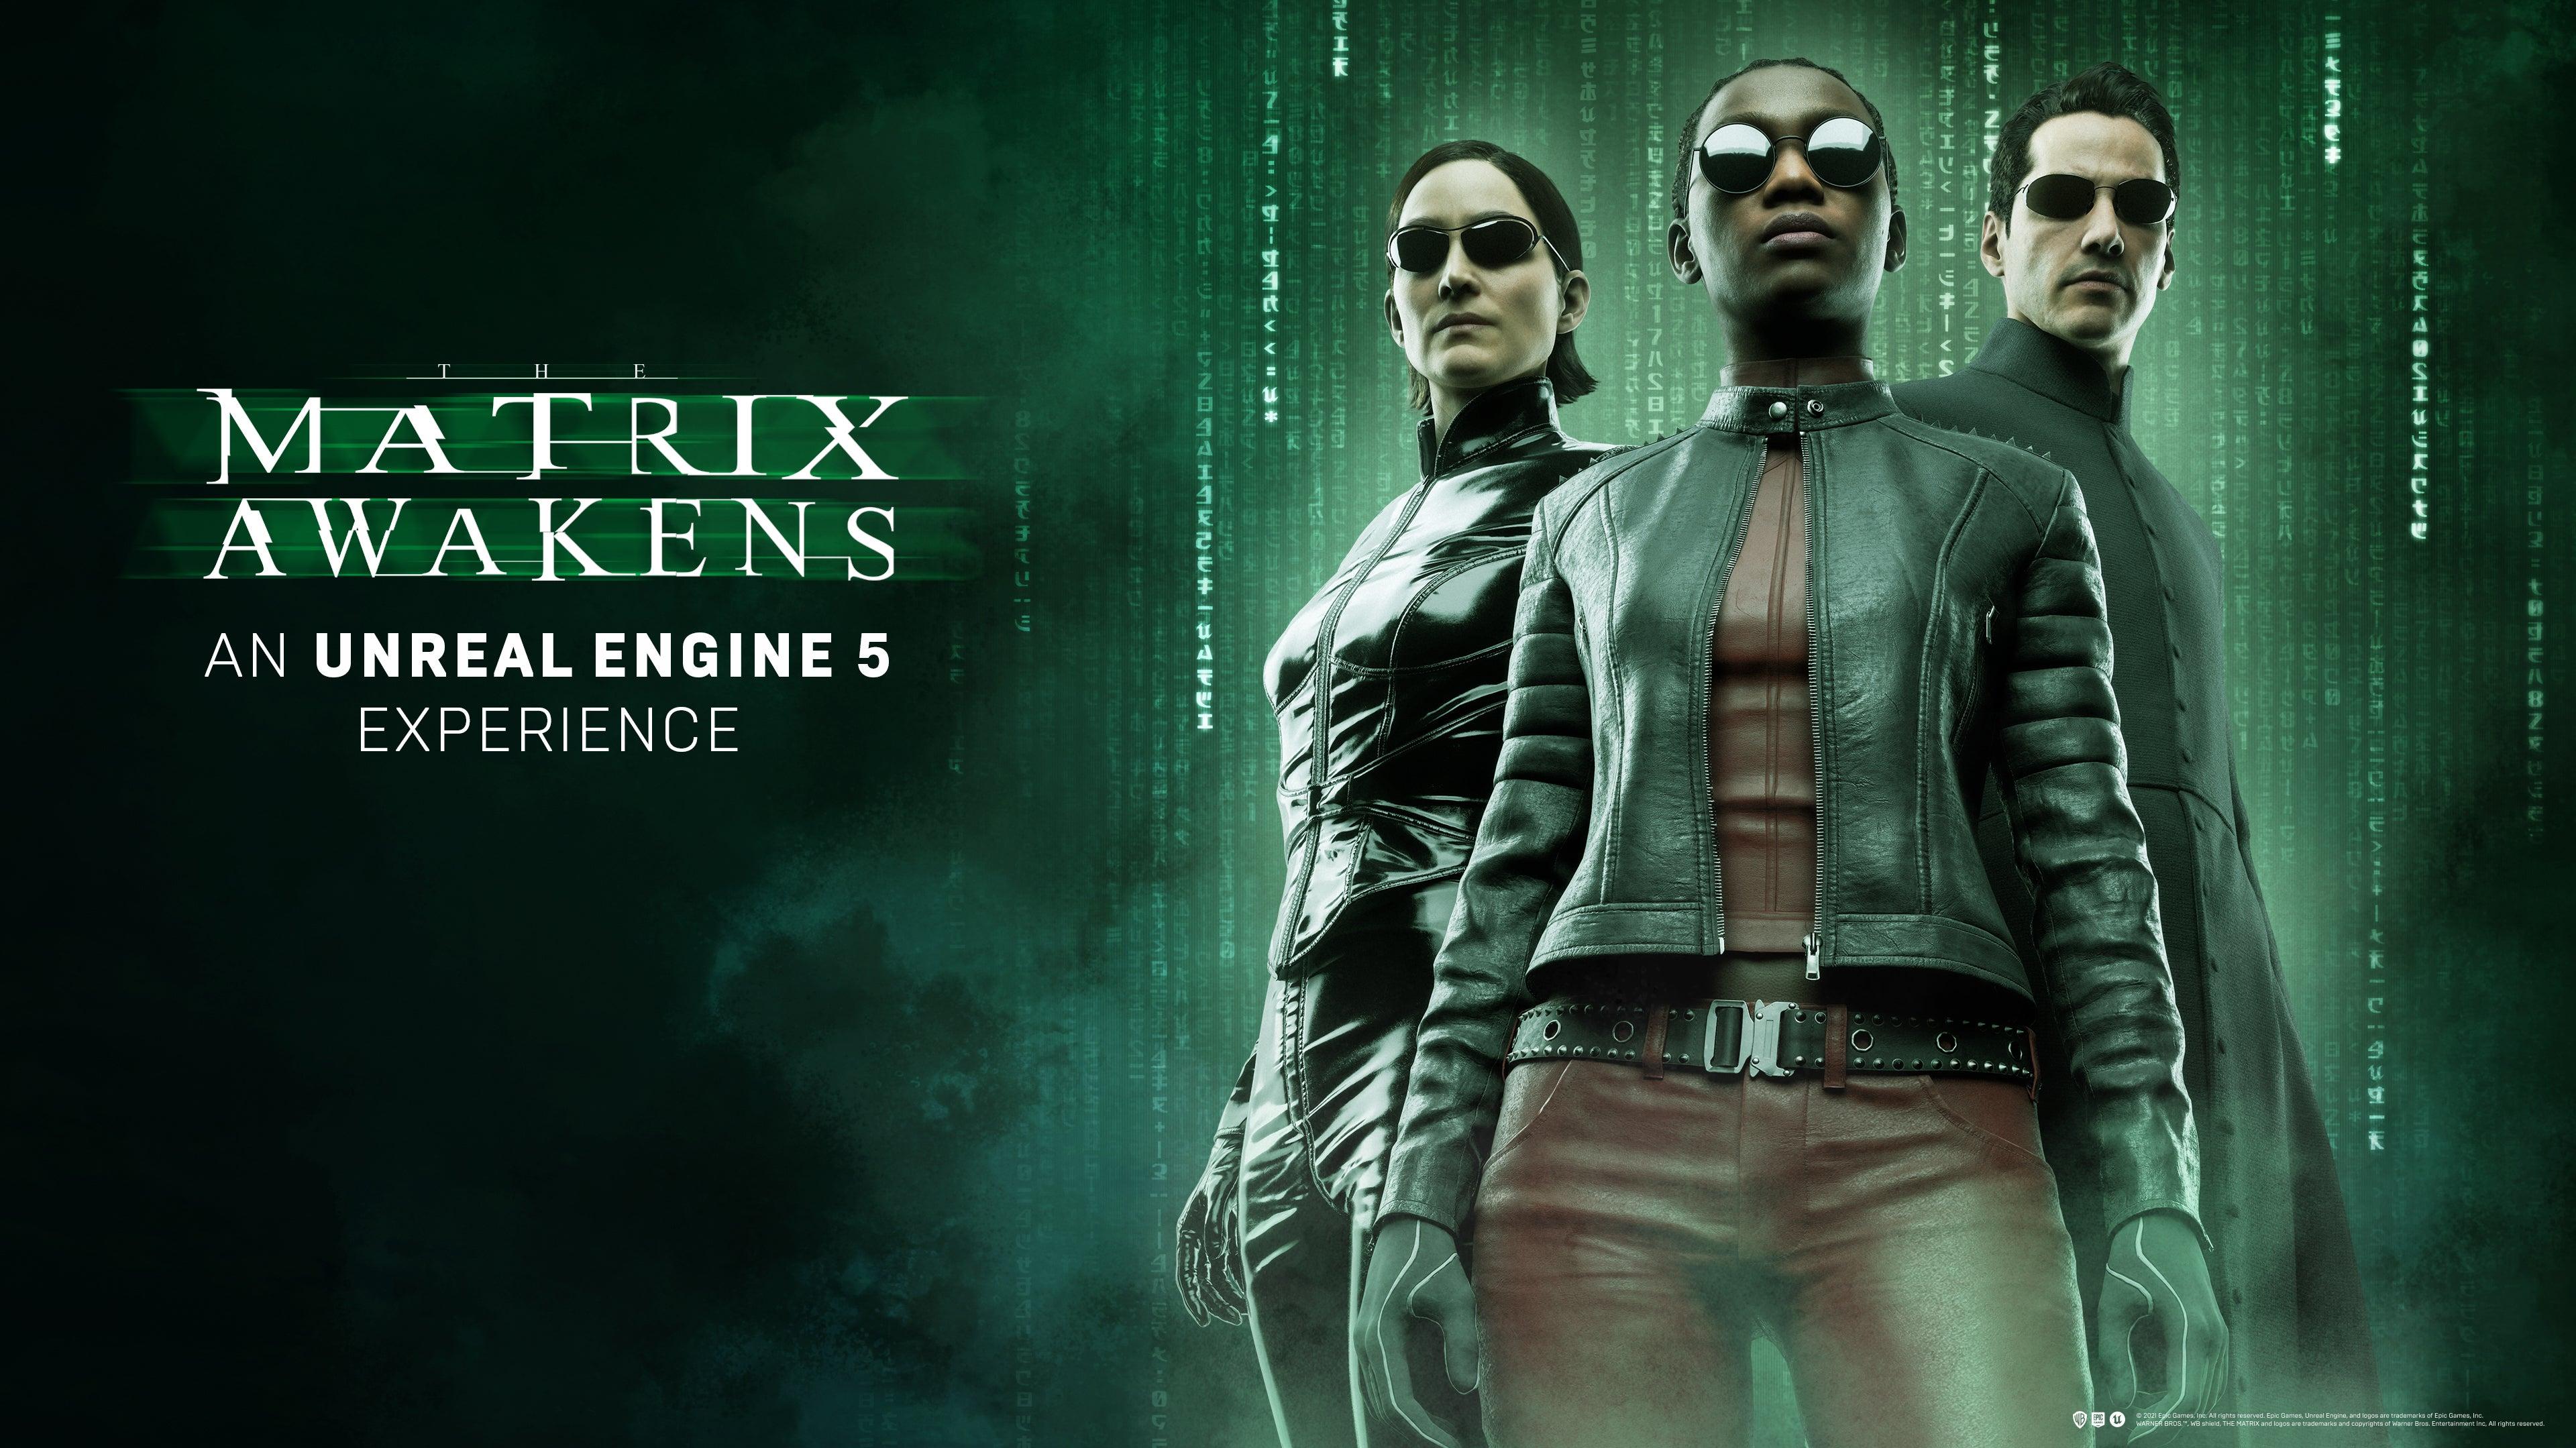 Slideshow The Matrix Awakens Unreal Engine Image